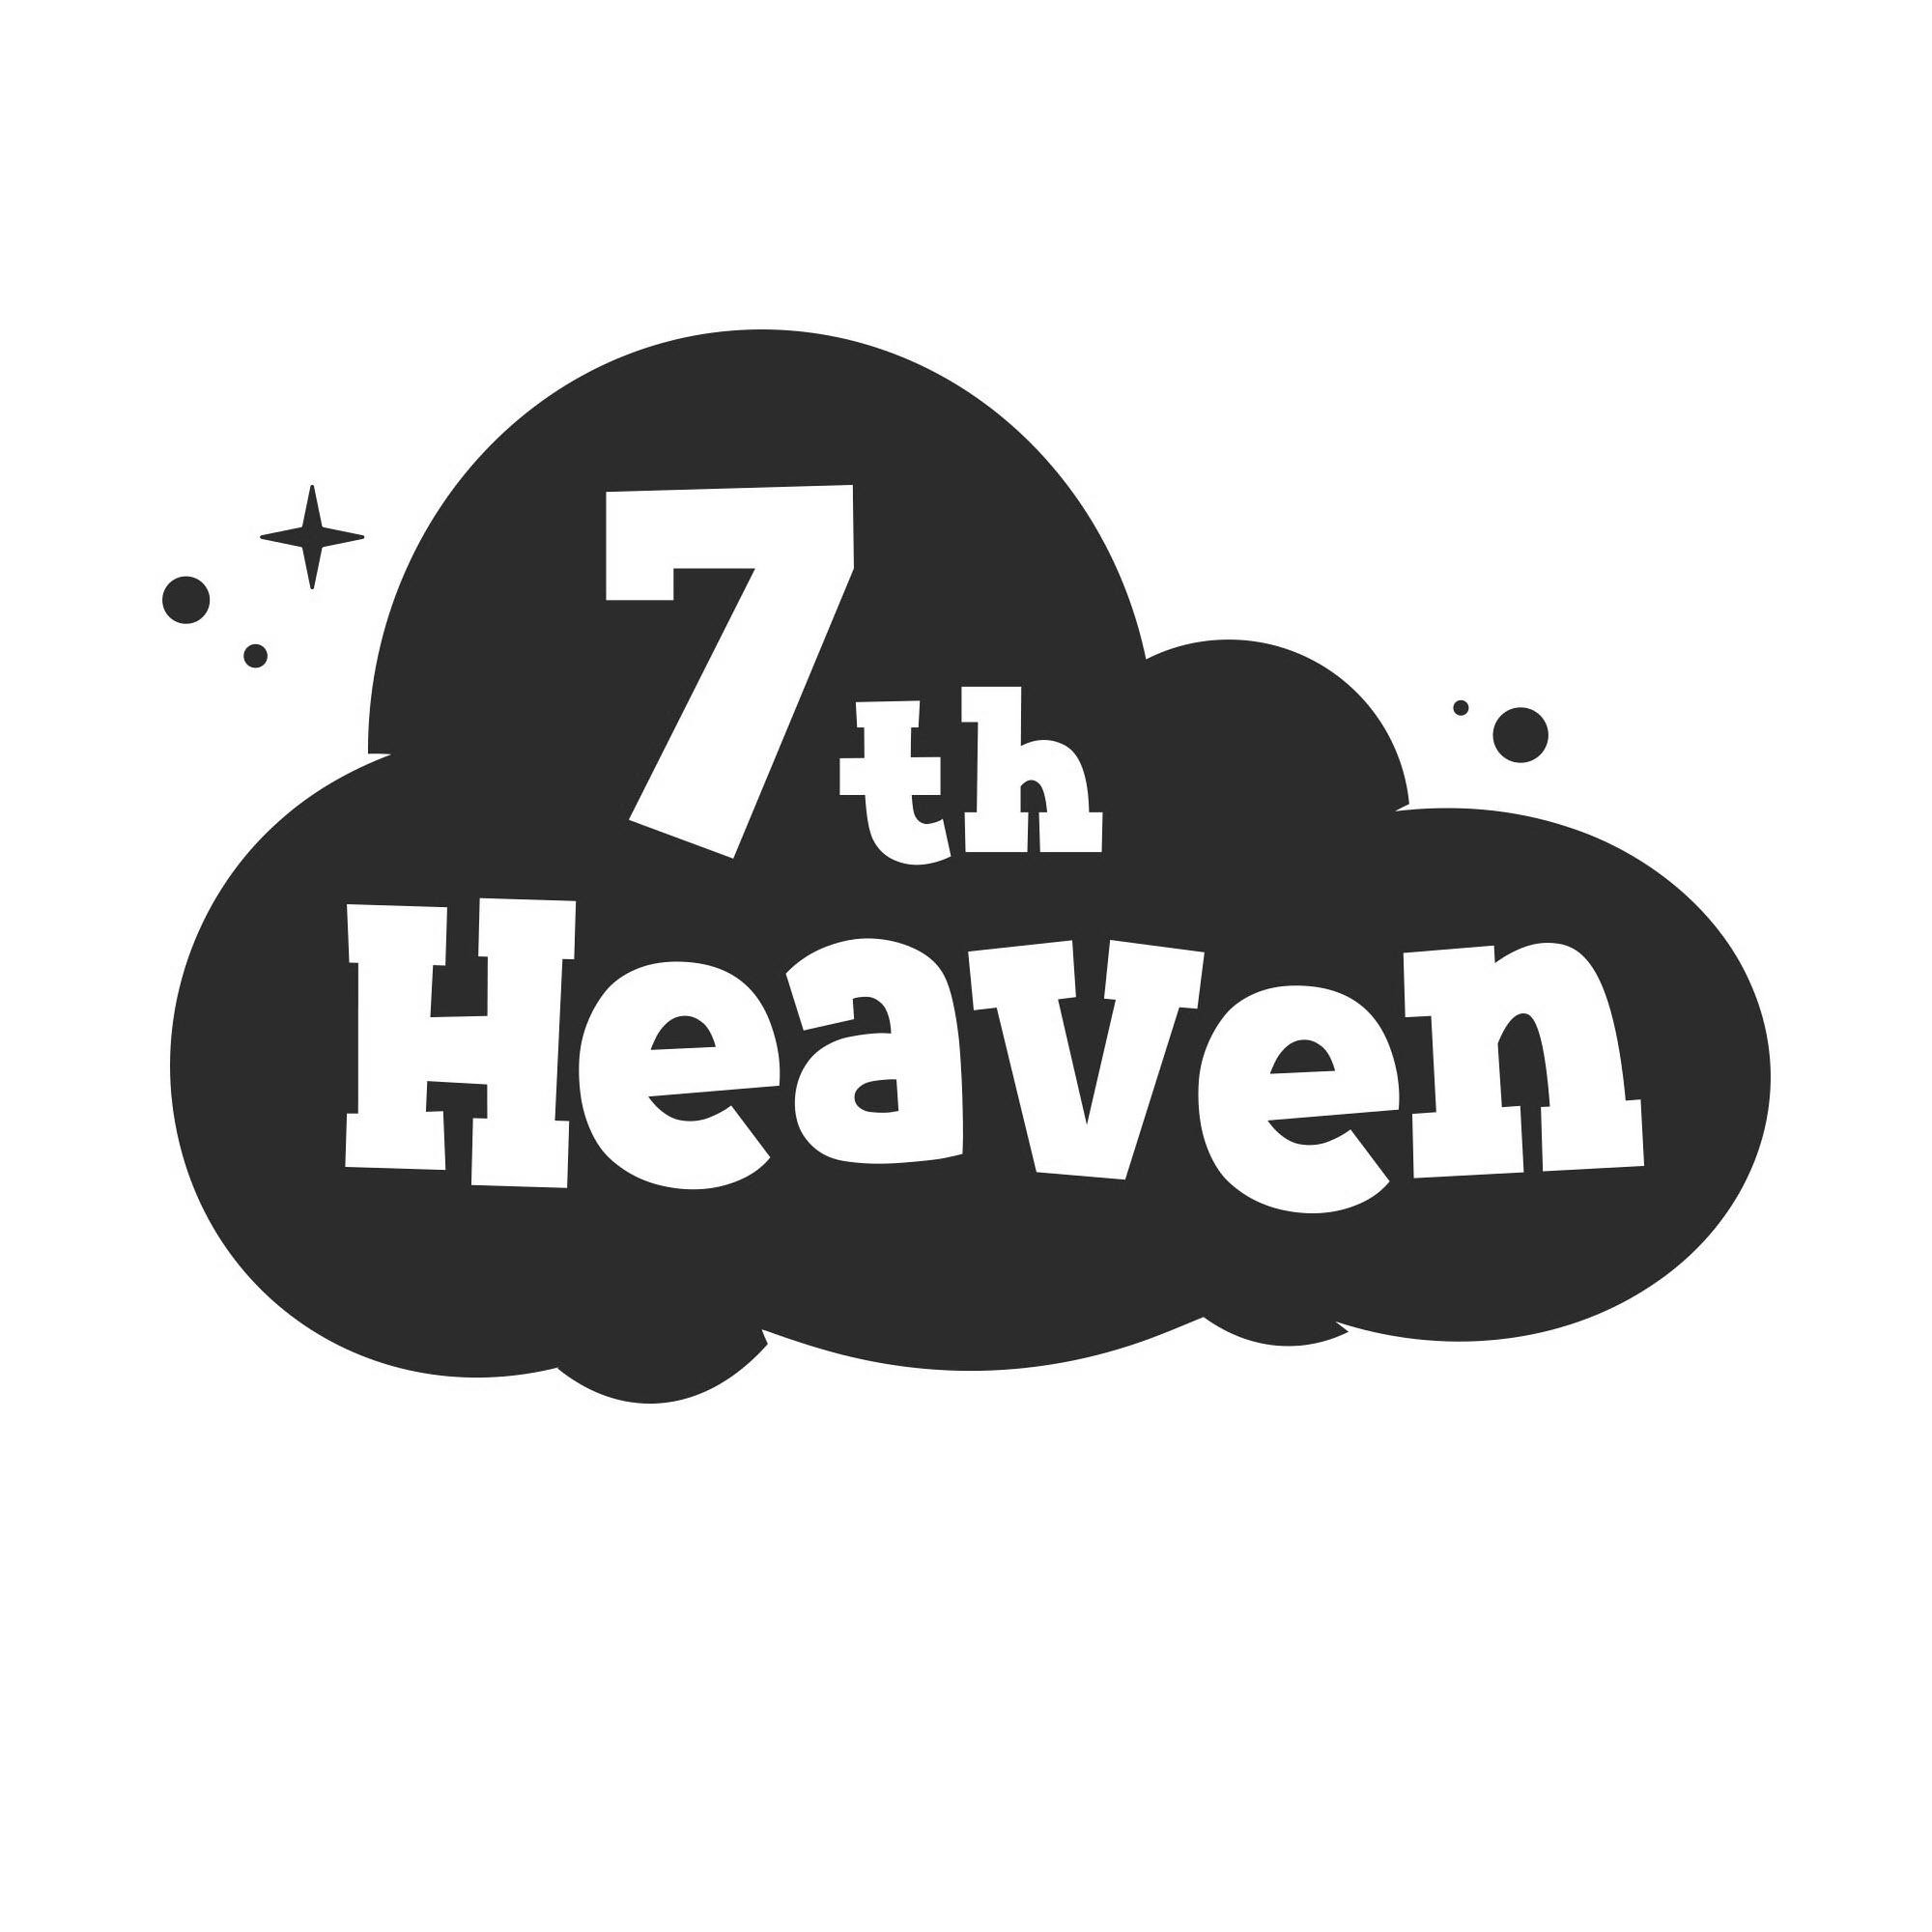 7TH HEAVEN